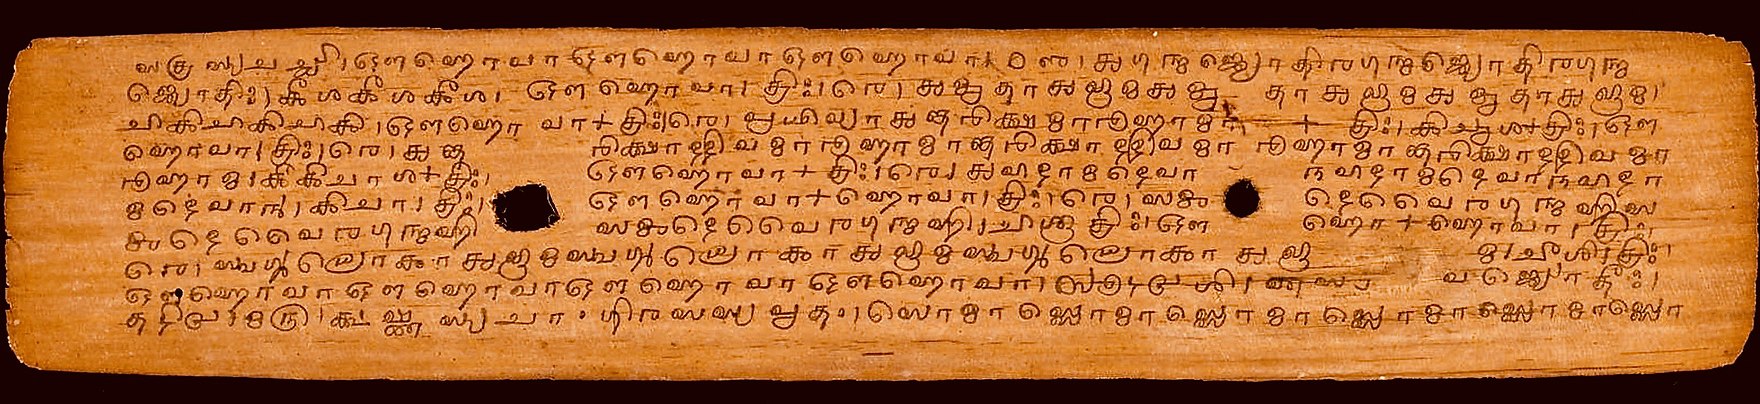 A page of the Jaiminiya Aranyaka Gana found embedded in the Samaveda palm leaf manuscript (Sanskrit, Grantha script).